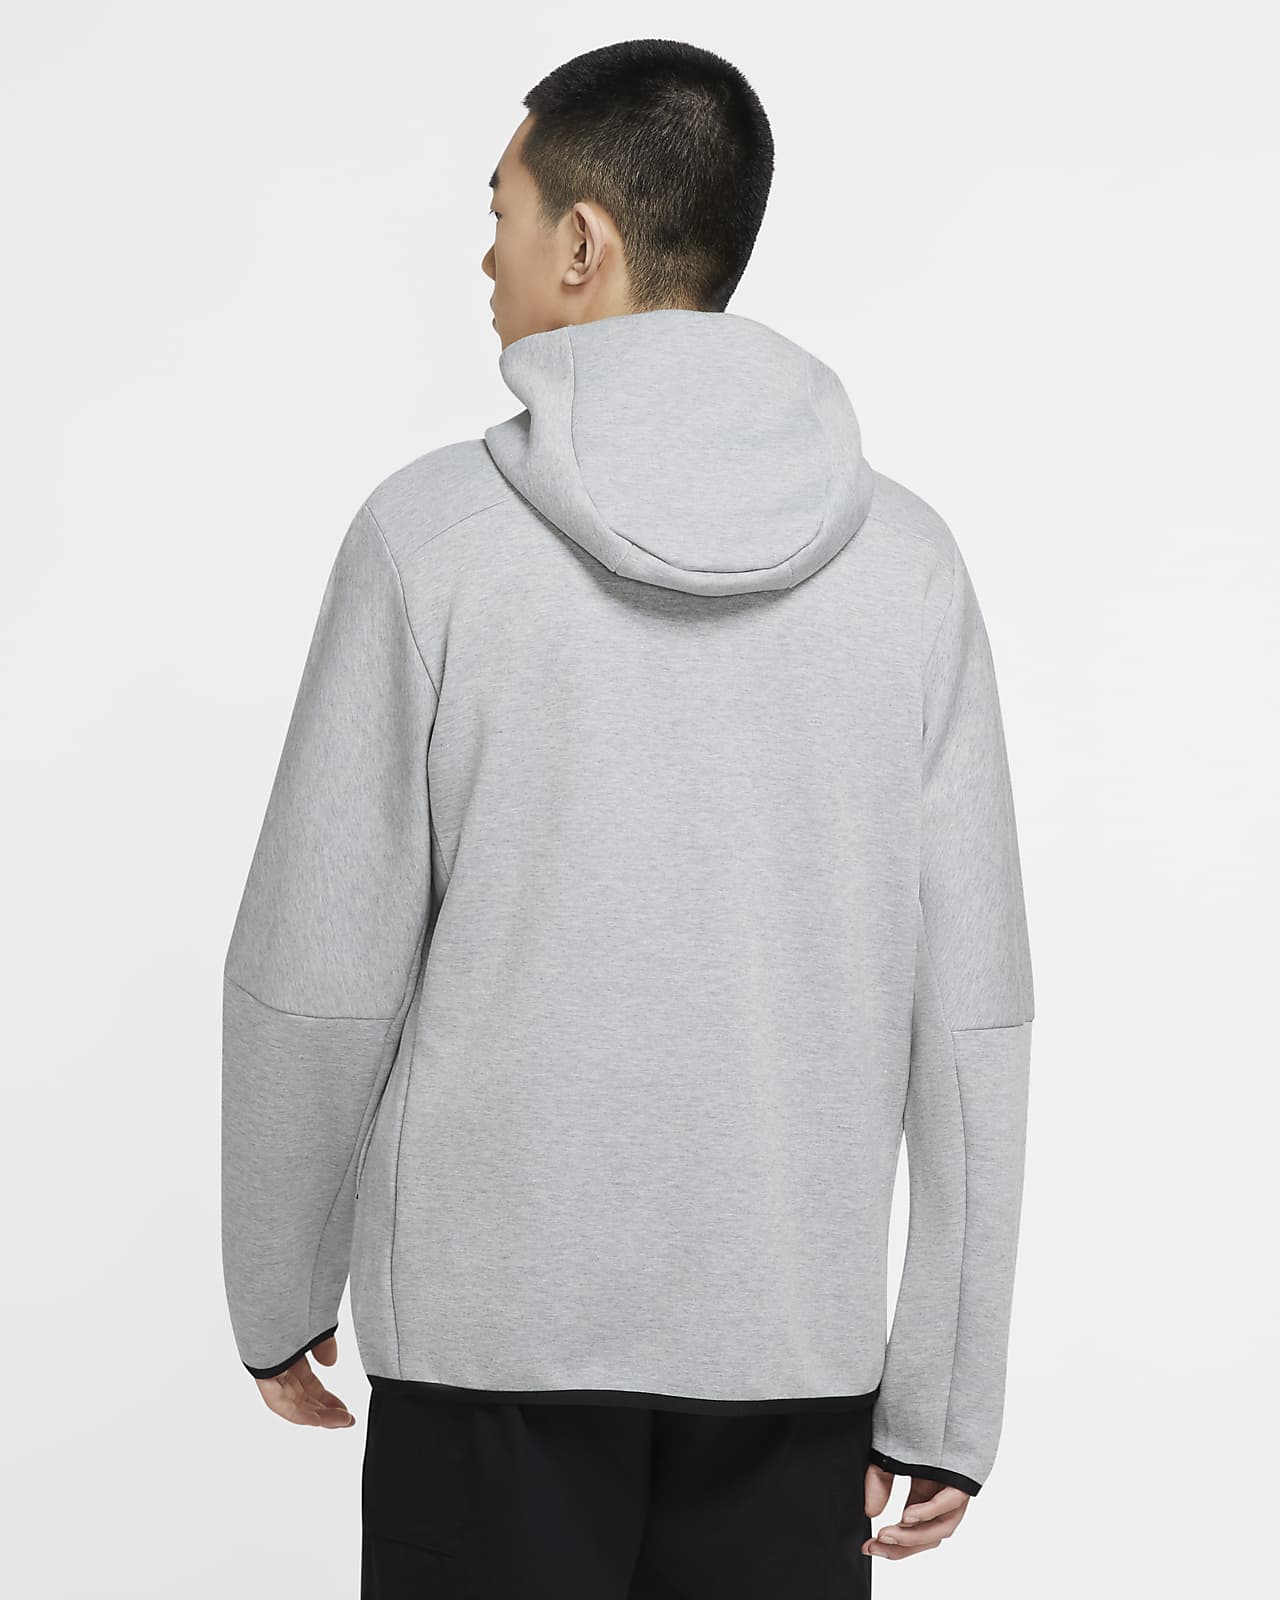 Nike Tech Fleece fullzip hoodie in khaki  ASOS